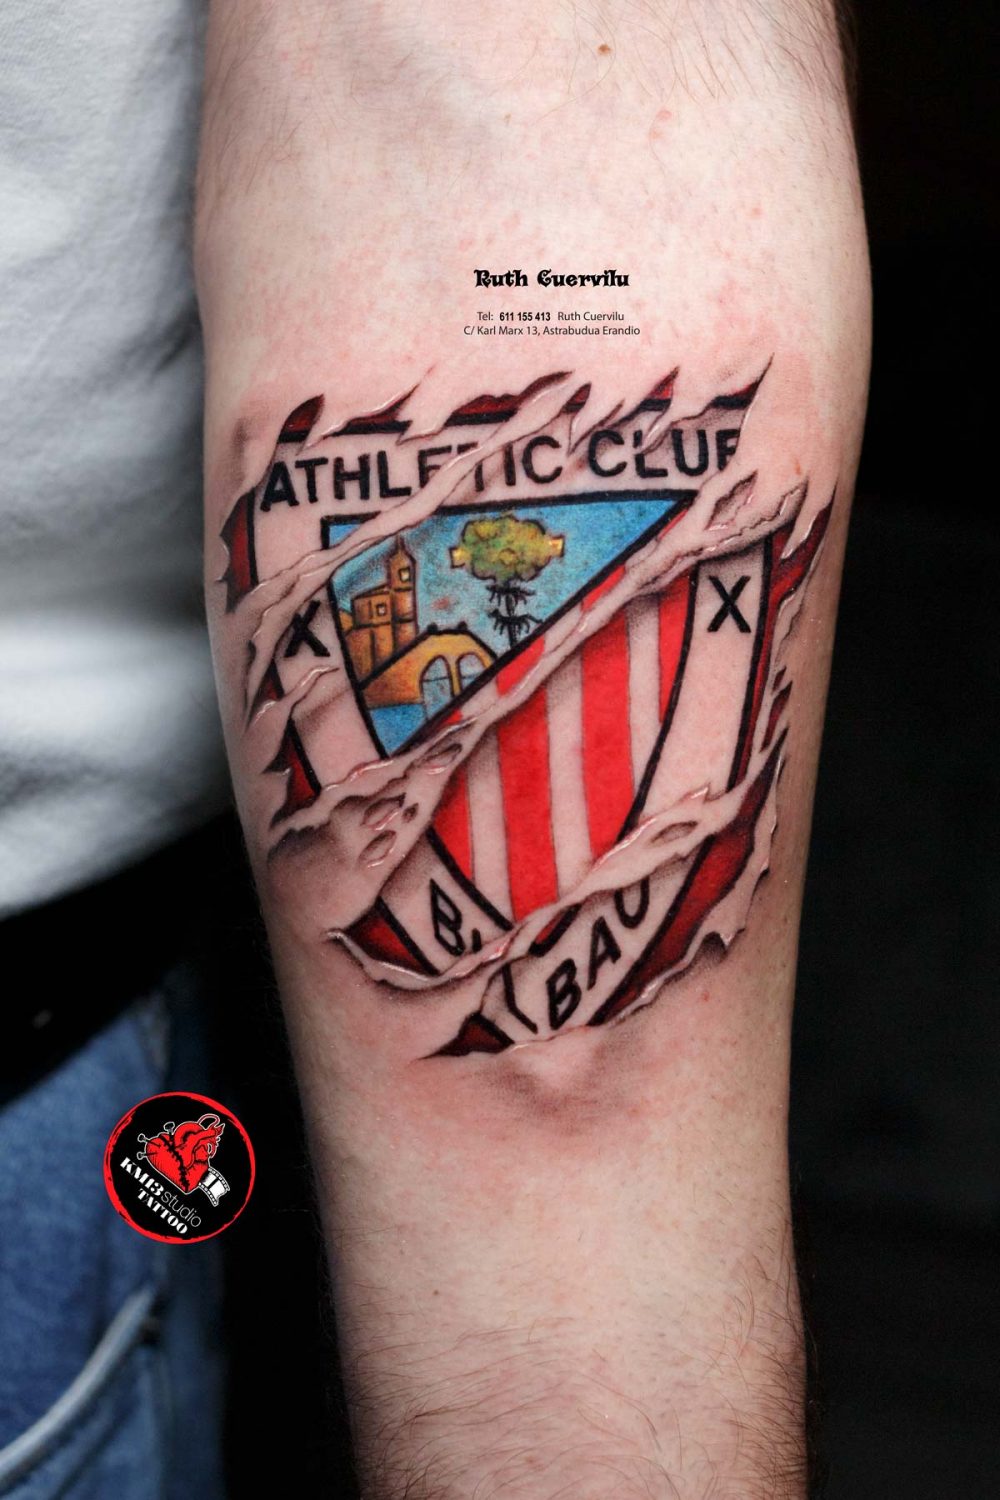 Tatuaje Escudo Athletic Club Bilbao bajo la piel - Ruth Cuervilu Tattoo - KM13 Studio - estudio de tatuajes erandio astrabudua bilbao bizkaia